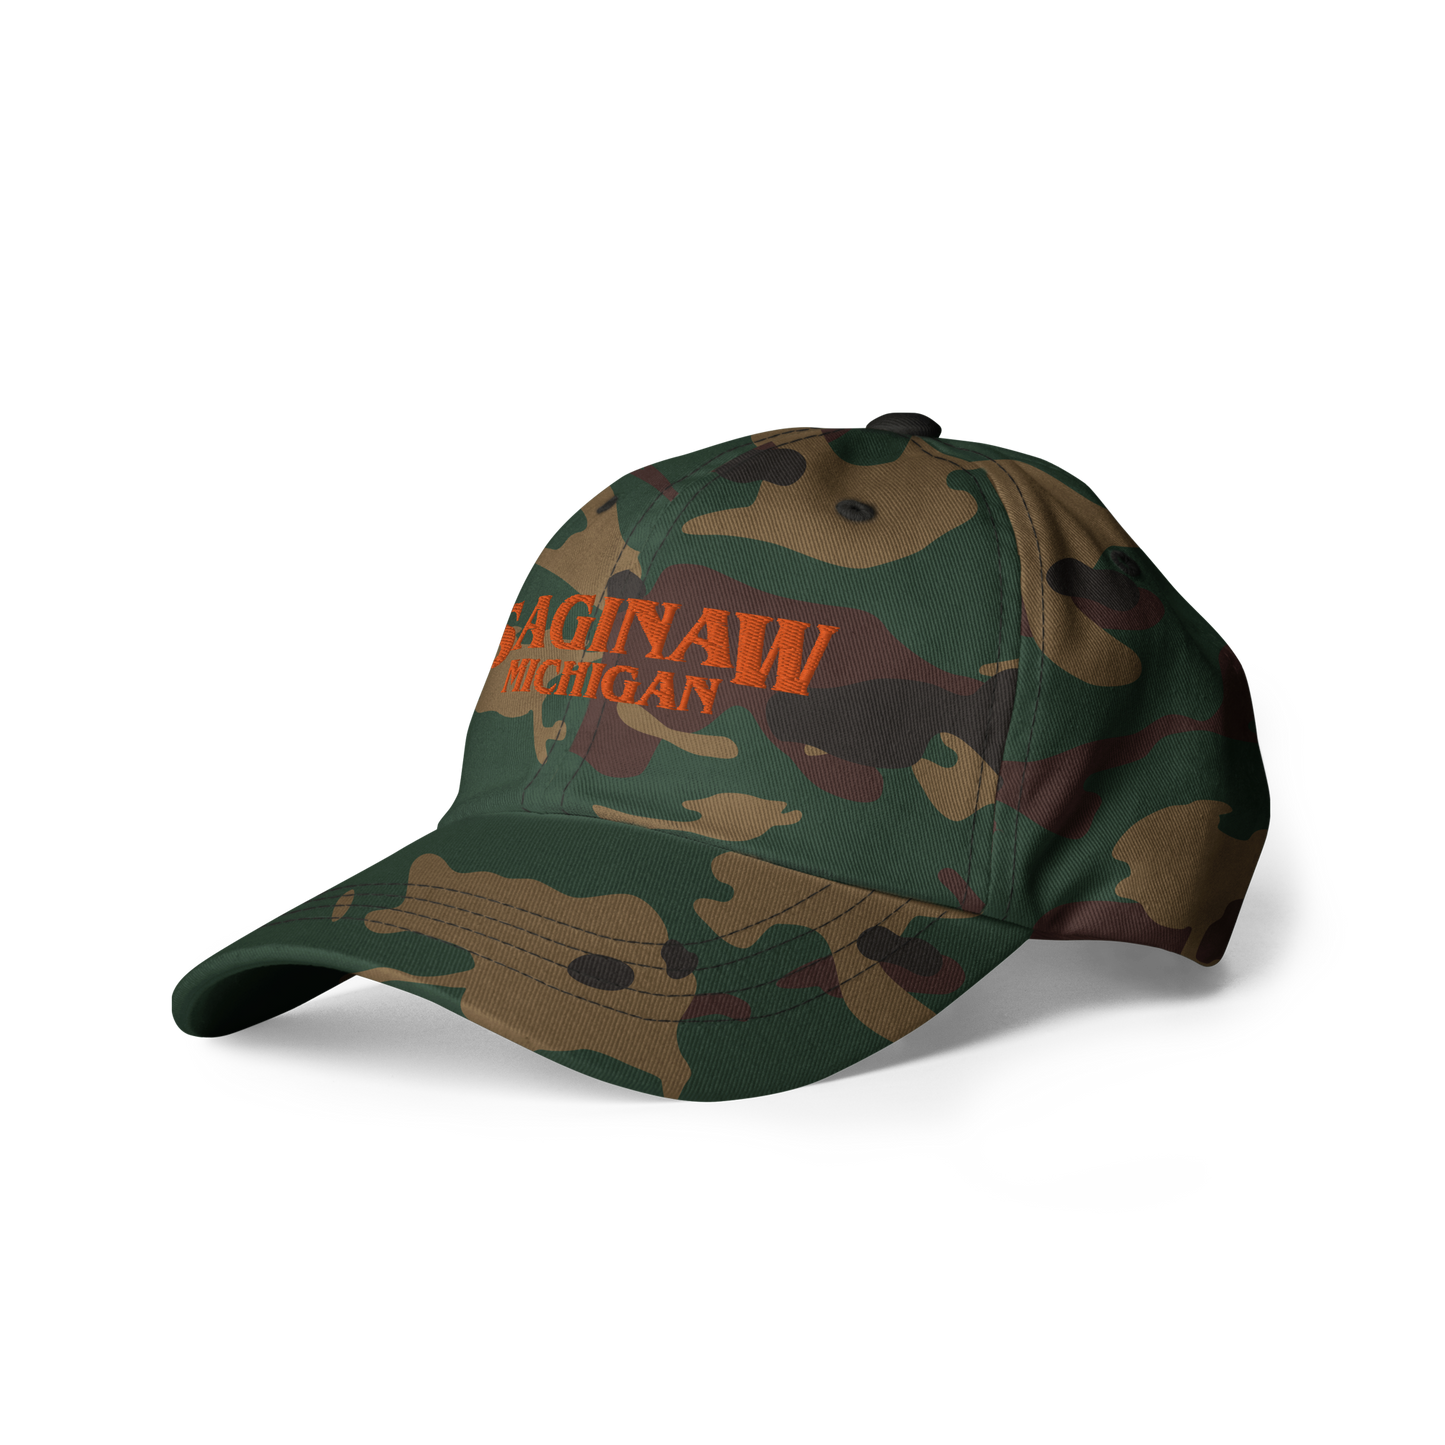 'Saginaw Michigan' Camouflage Cap (1980s Drama Parody)